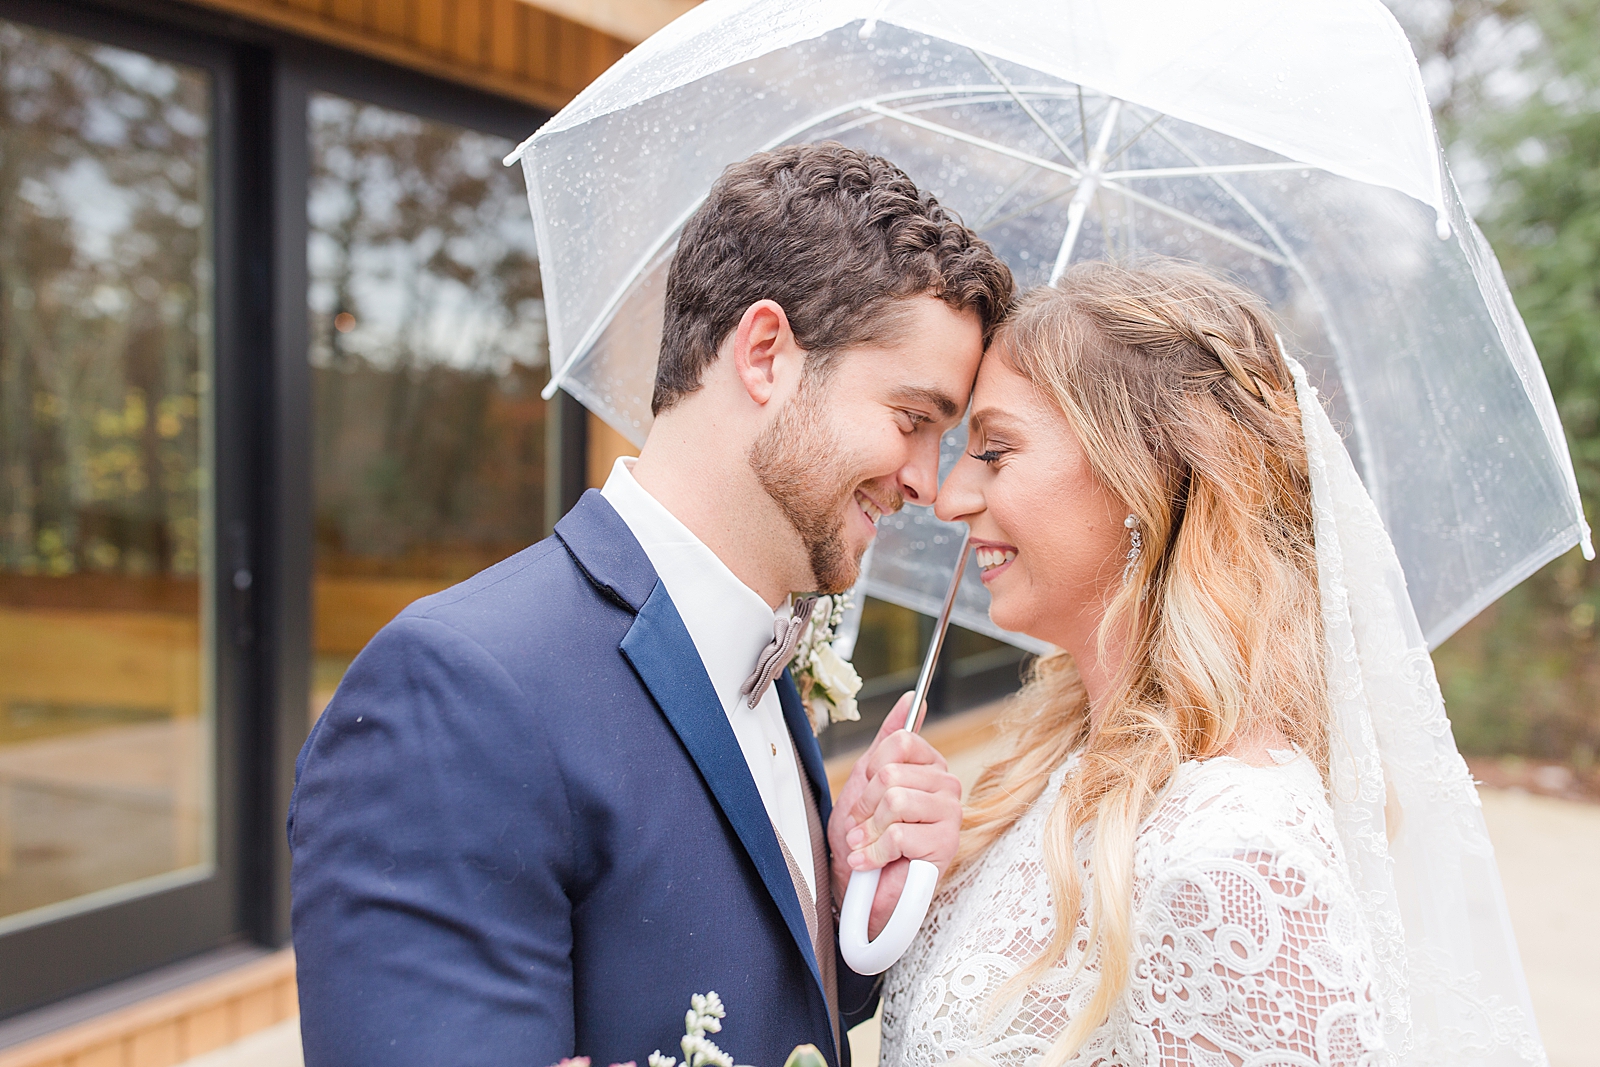 Rainy Wedding Day Couple Nose to Nose Under Umbrella Photo 